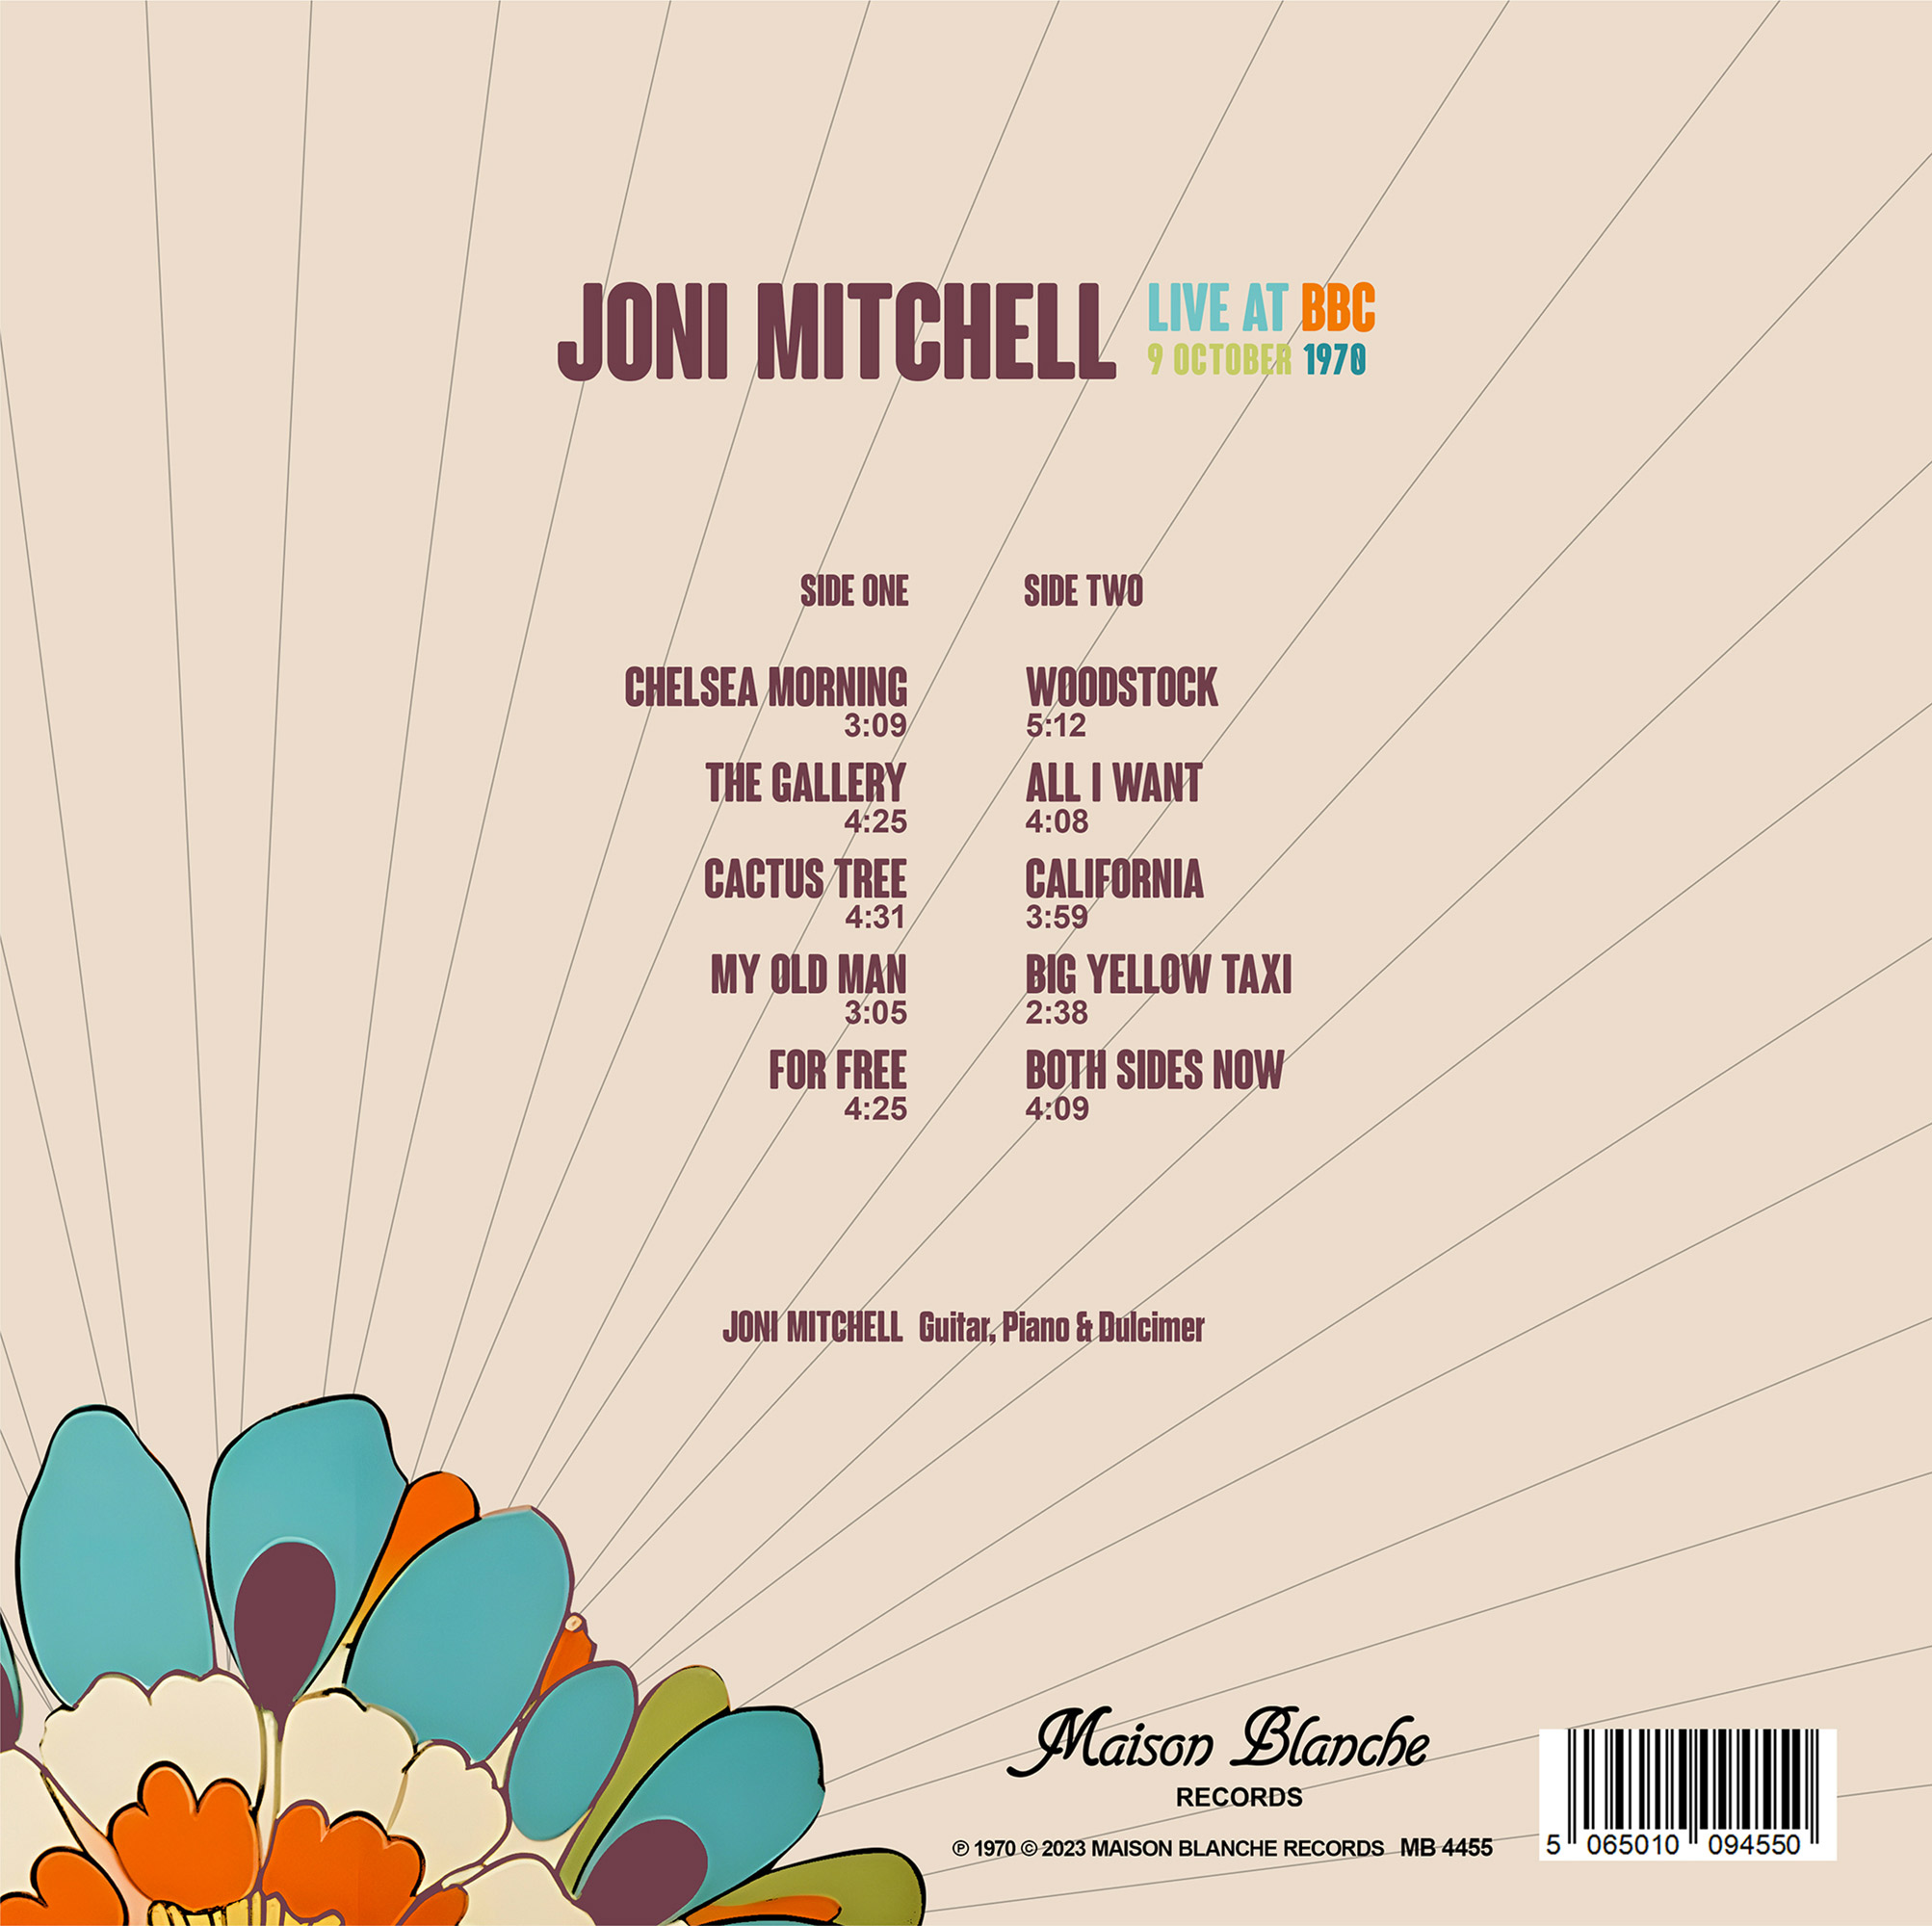 Joni Mitchell (조니 미첼) - Live at BBC, 9 October 1970 [LP]